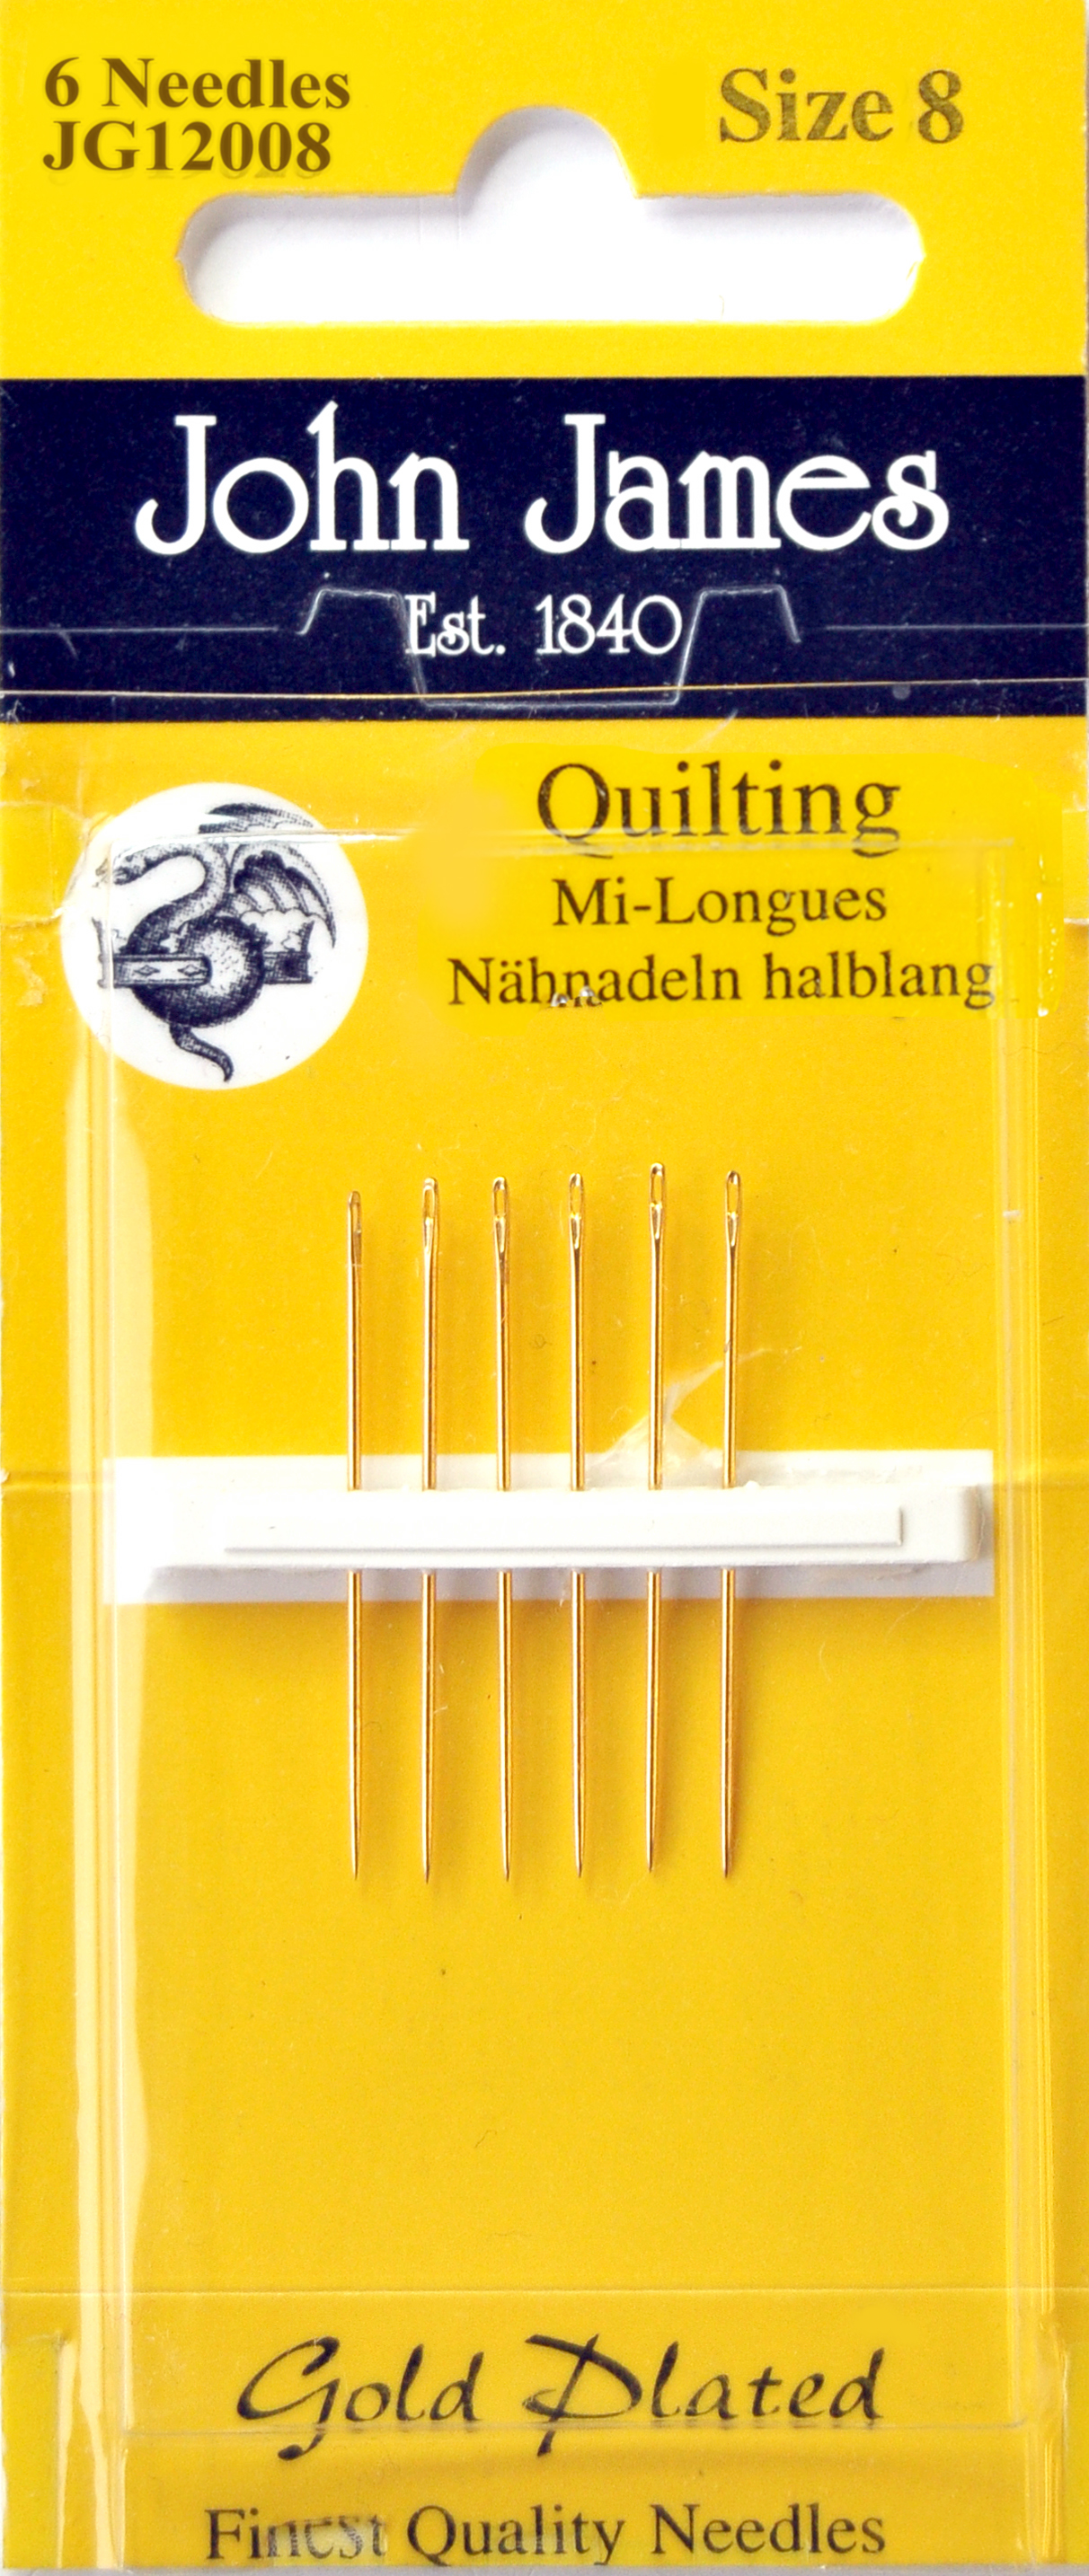 Quilting-Needles